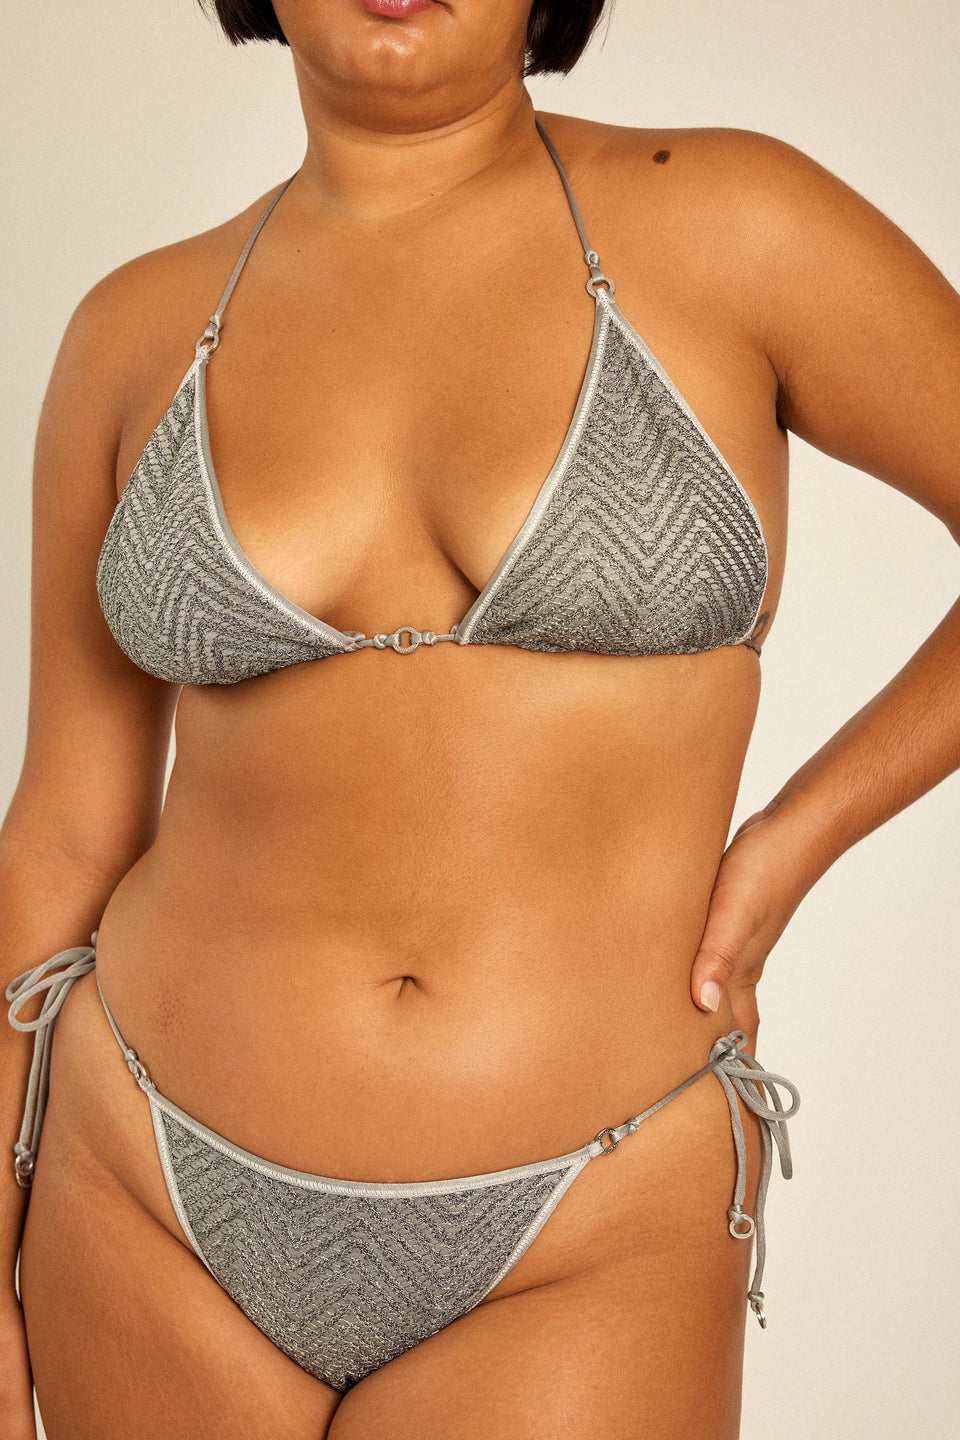 Great flattering fit Bikini two piece worn as top by plus size XL beautiful curvy model.